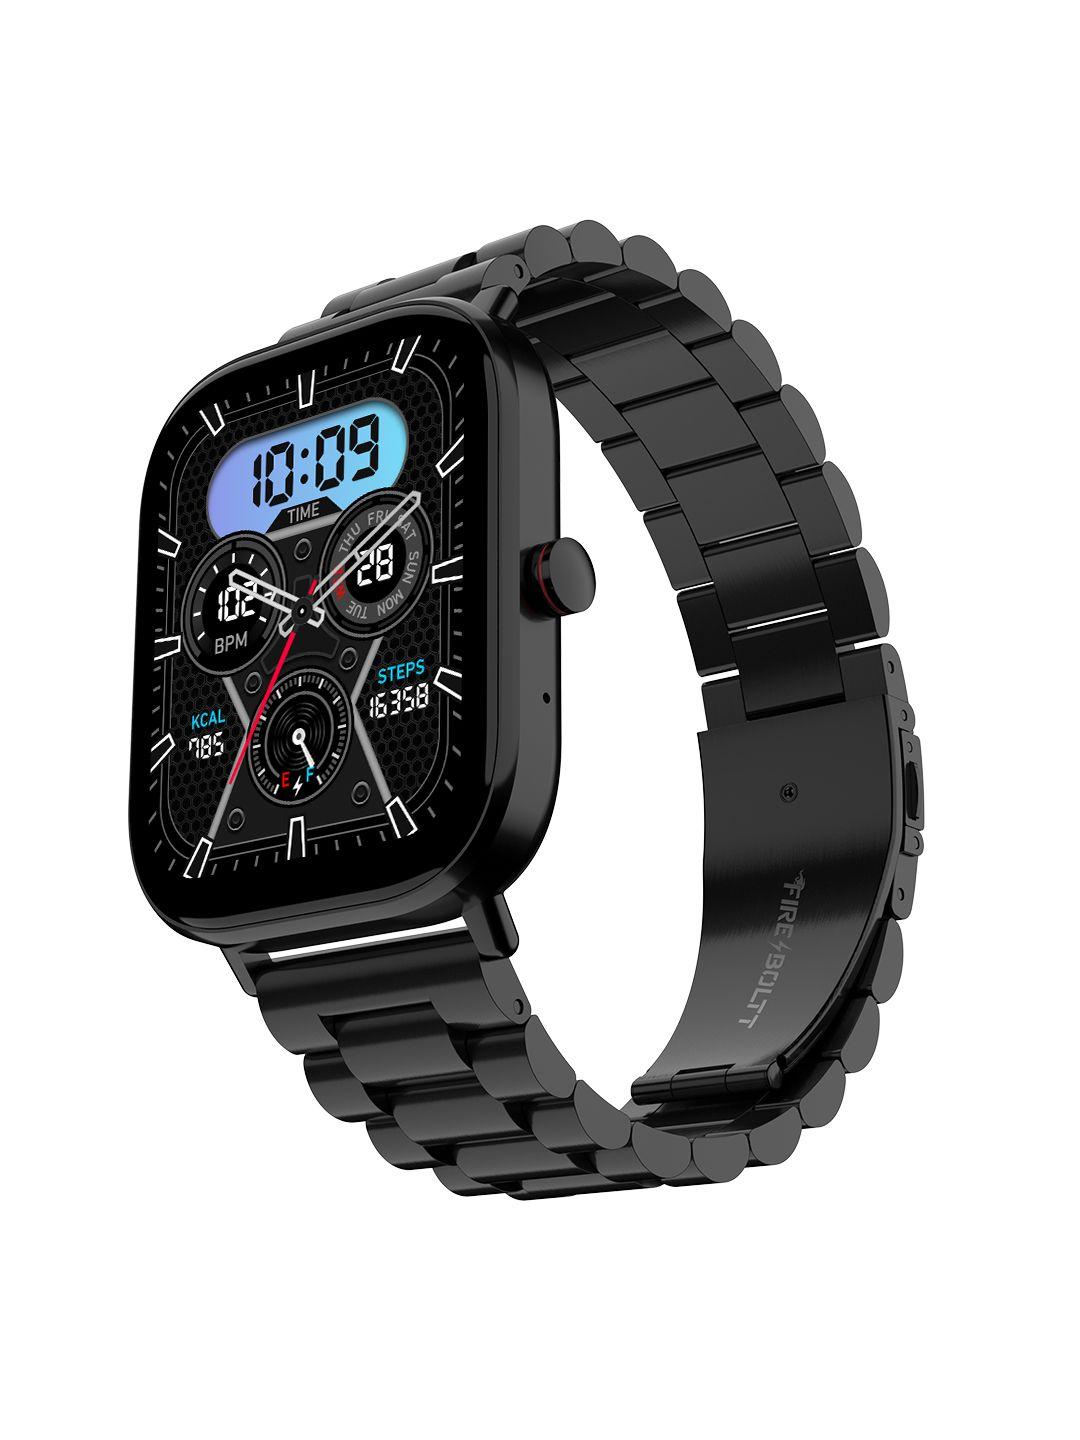 fire-boltt starlight 1.96" hd display luxury smartwatch with bluetooth calling